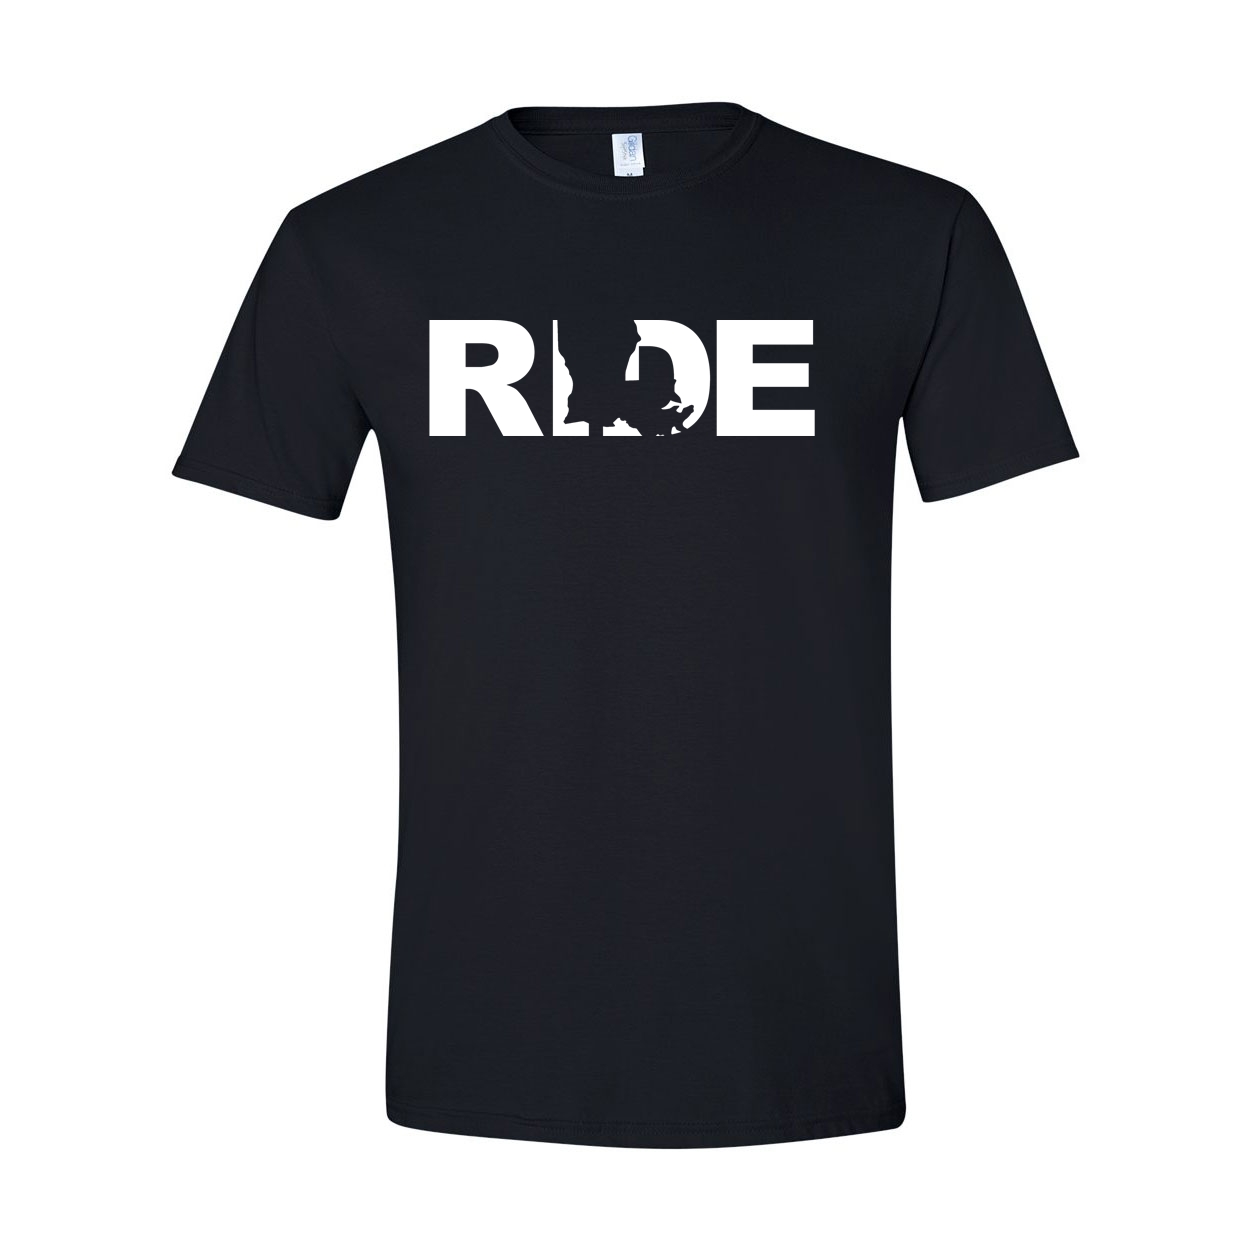 Ride Louisiana Classic T-Shirt Black (White Logo)